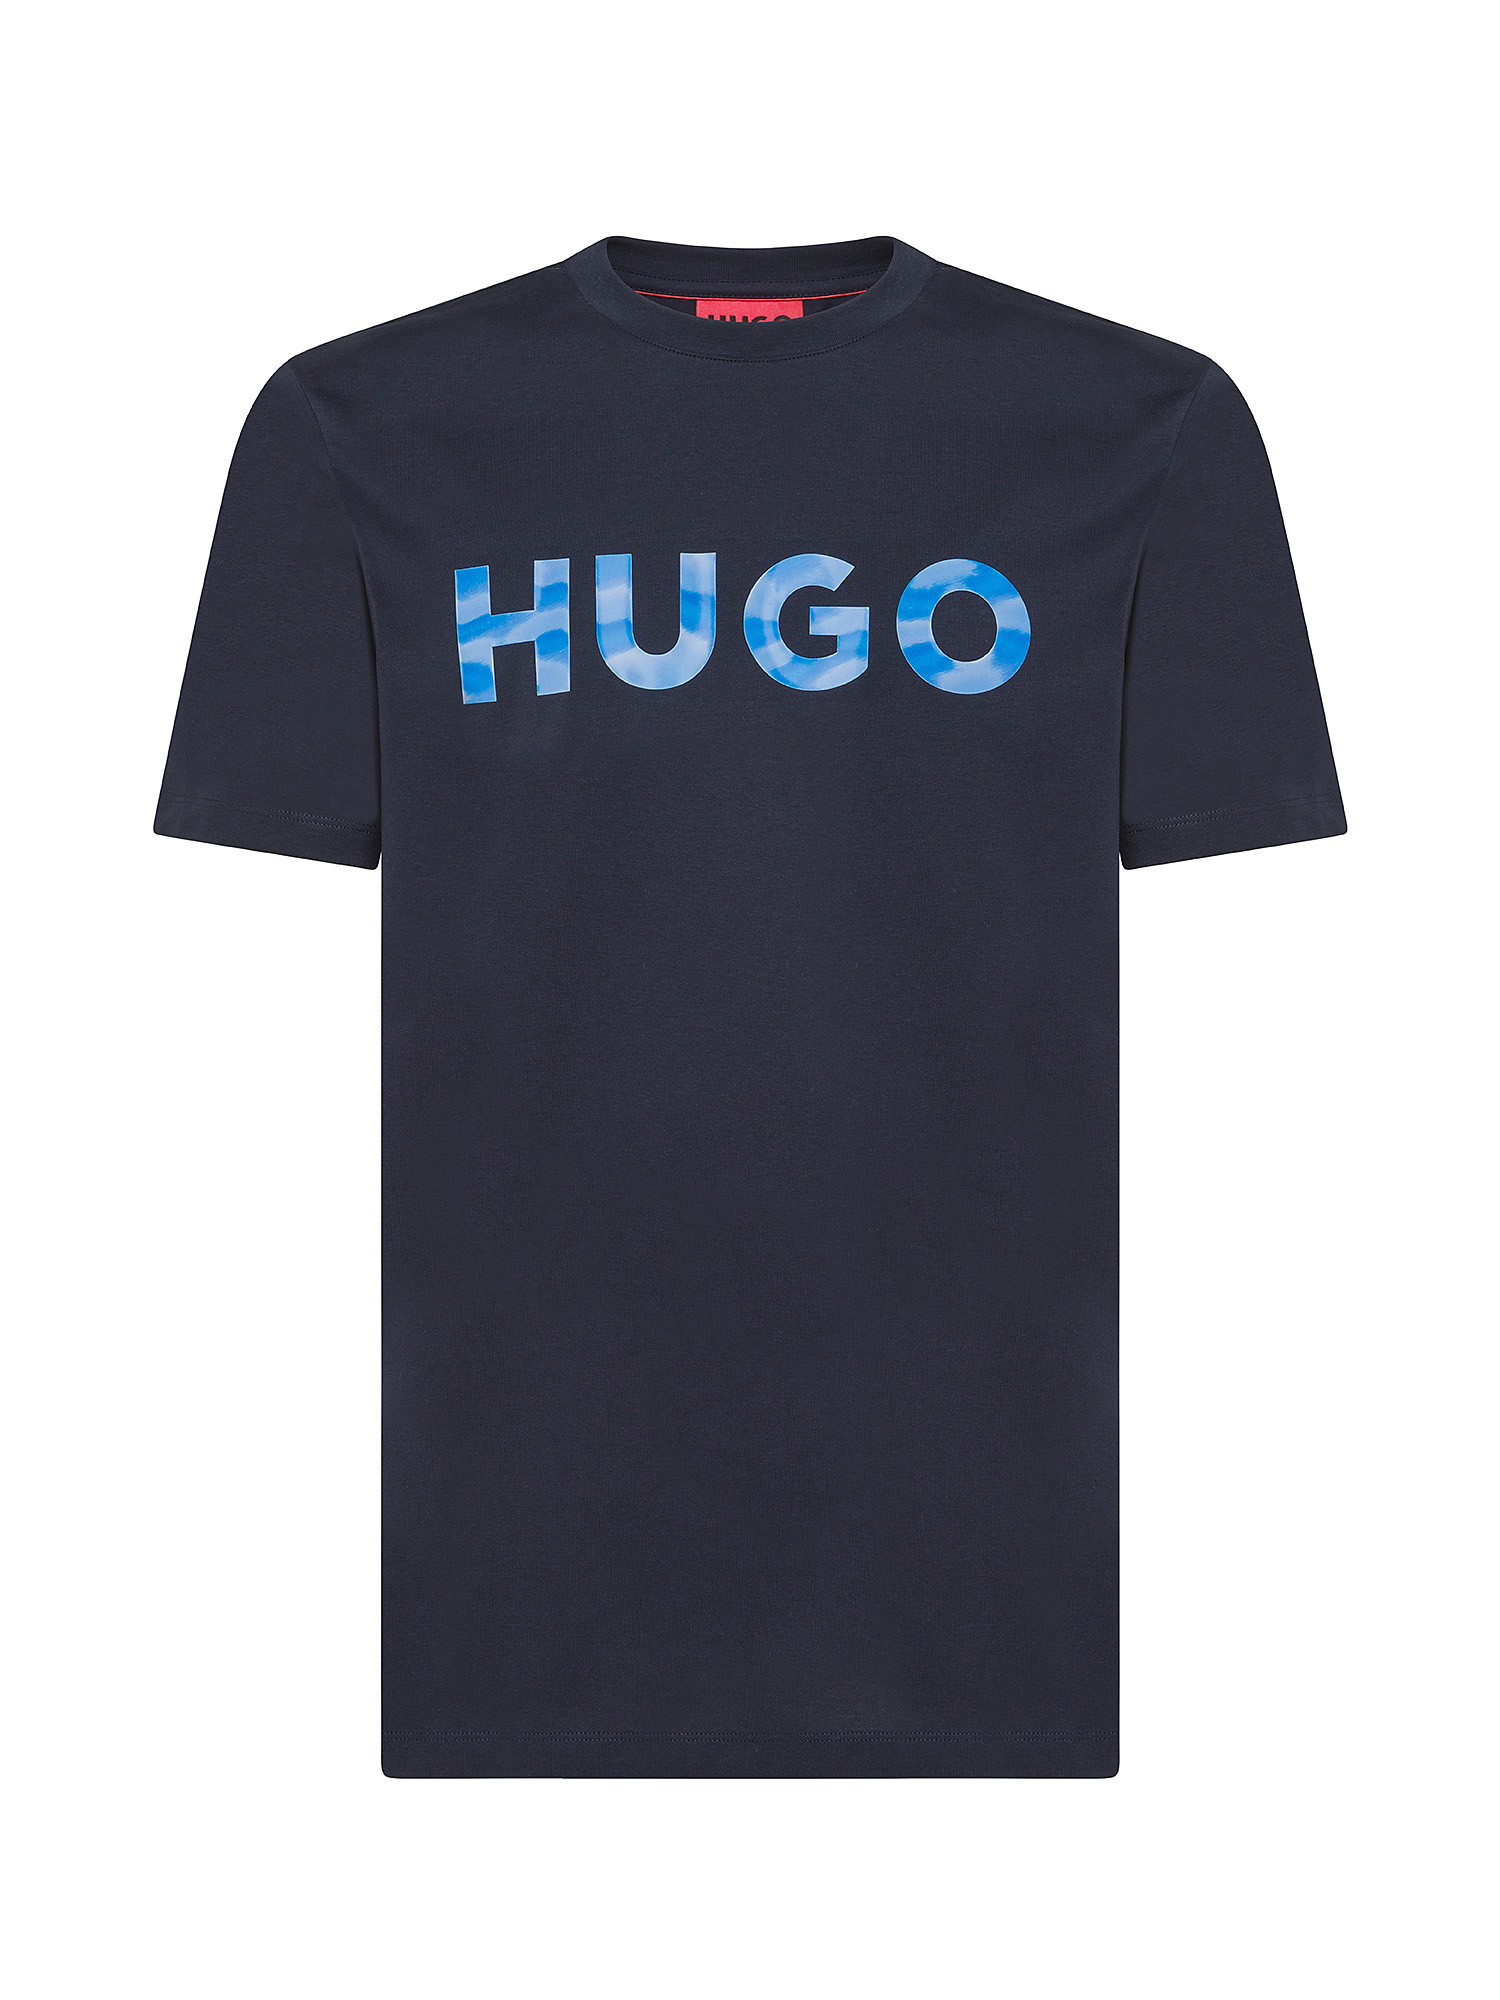 Hugo - Organic cotton T-shirt with printed logo, Dark Blue, large image number 0